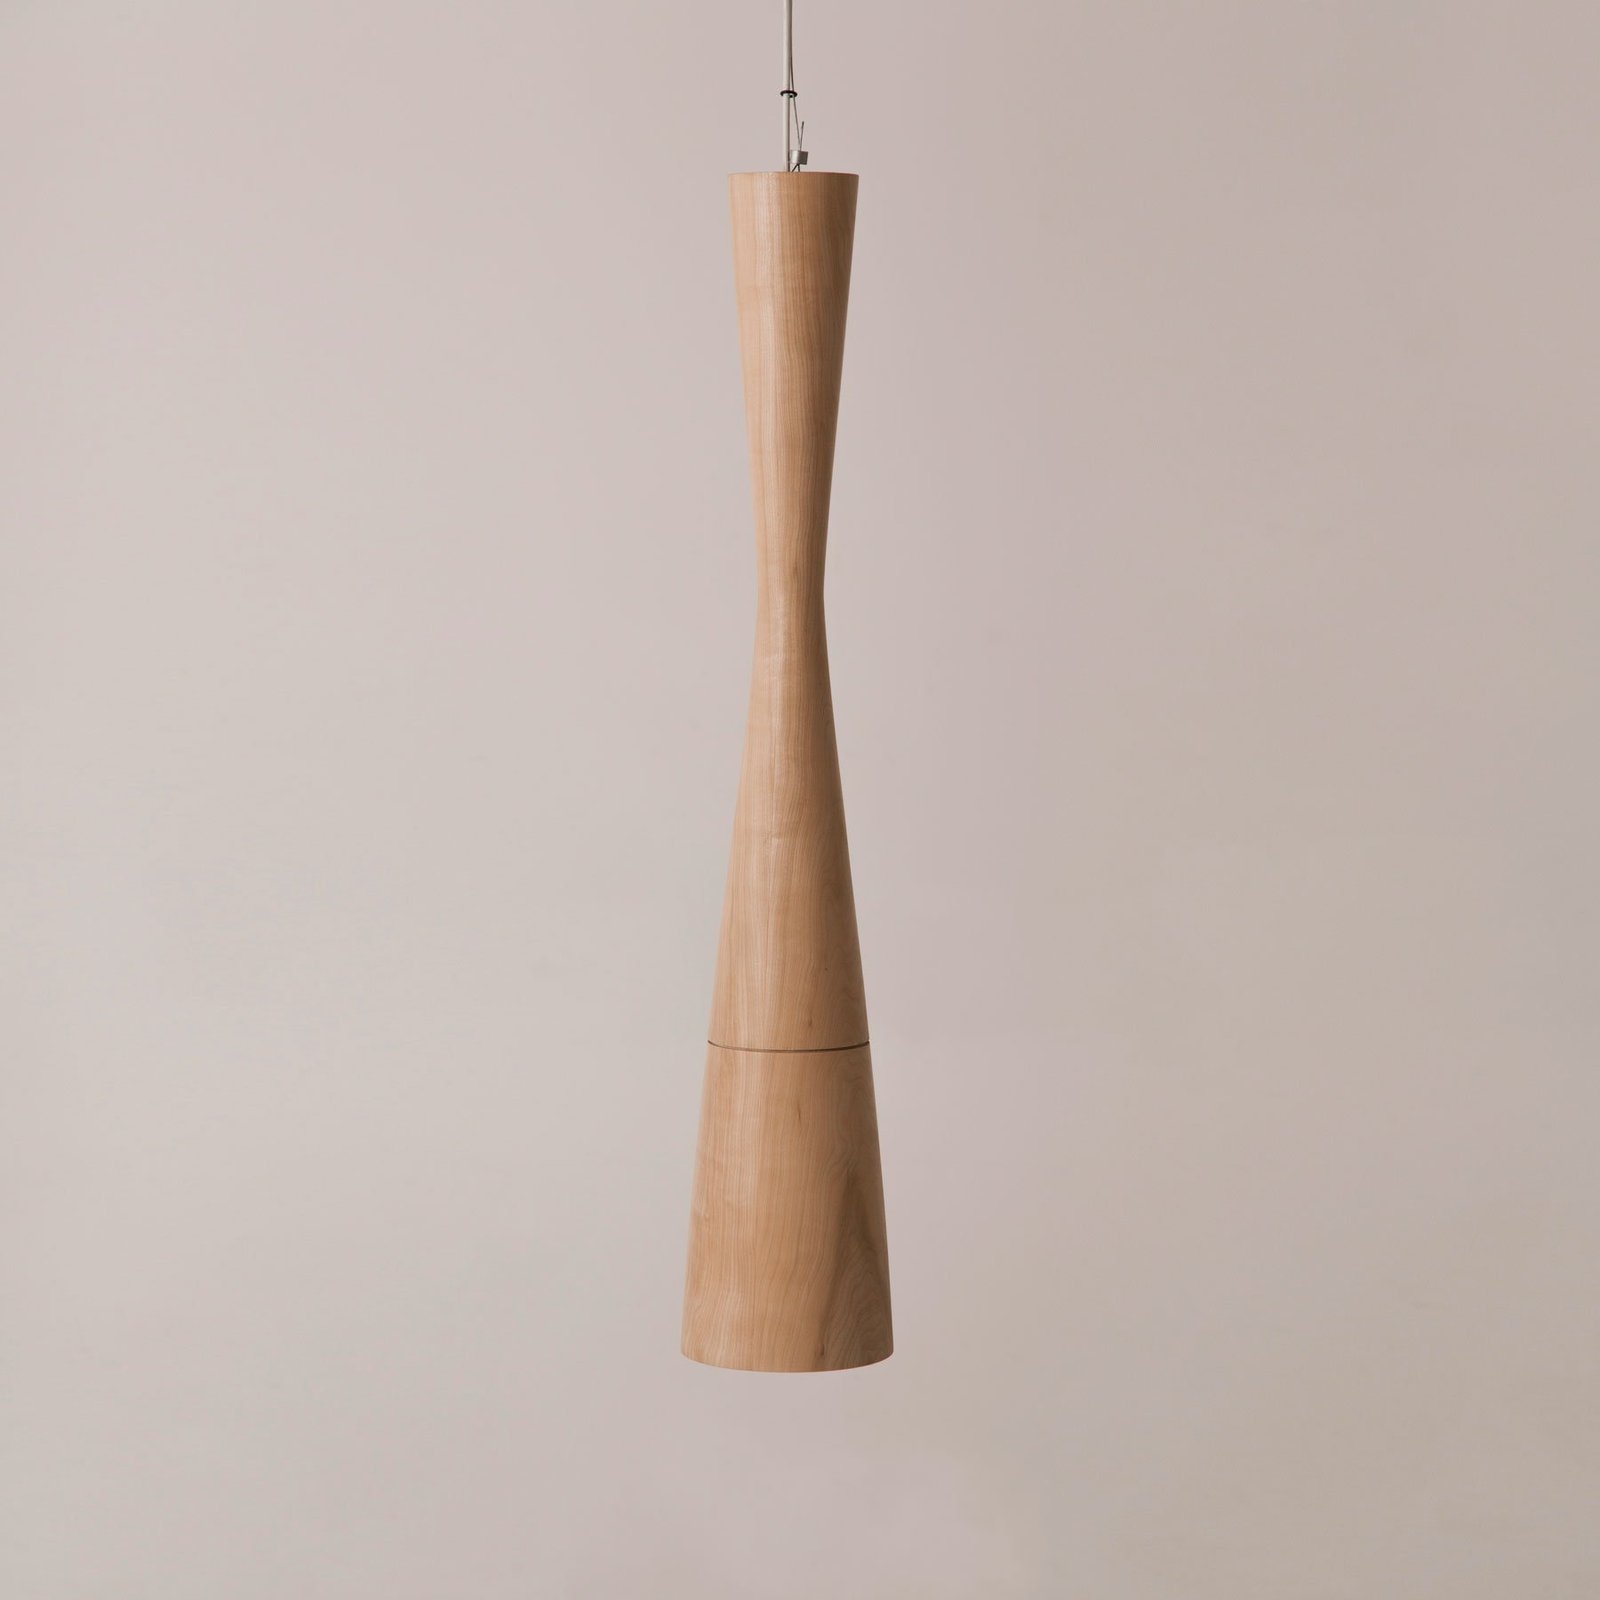 lampara colgante madera negra iluminacion hogar comedor mesa diseño decorativa